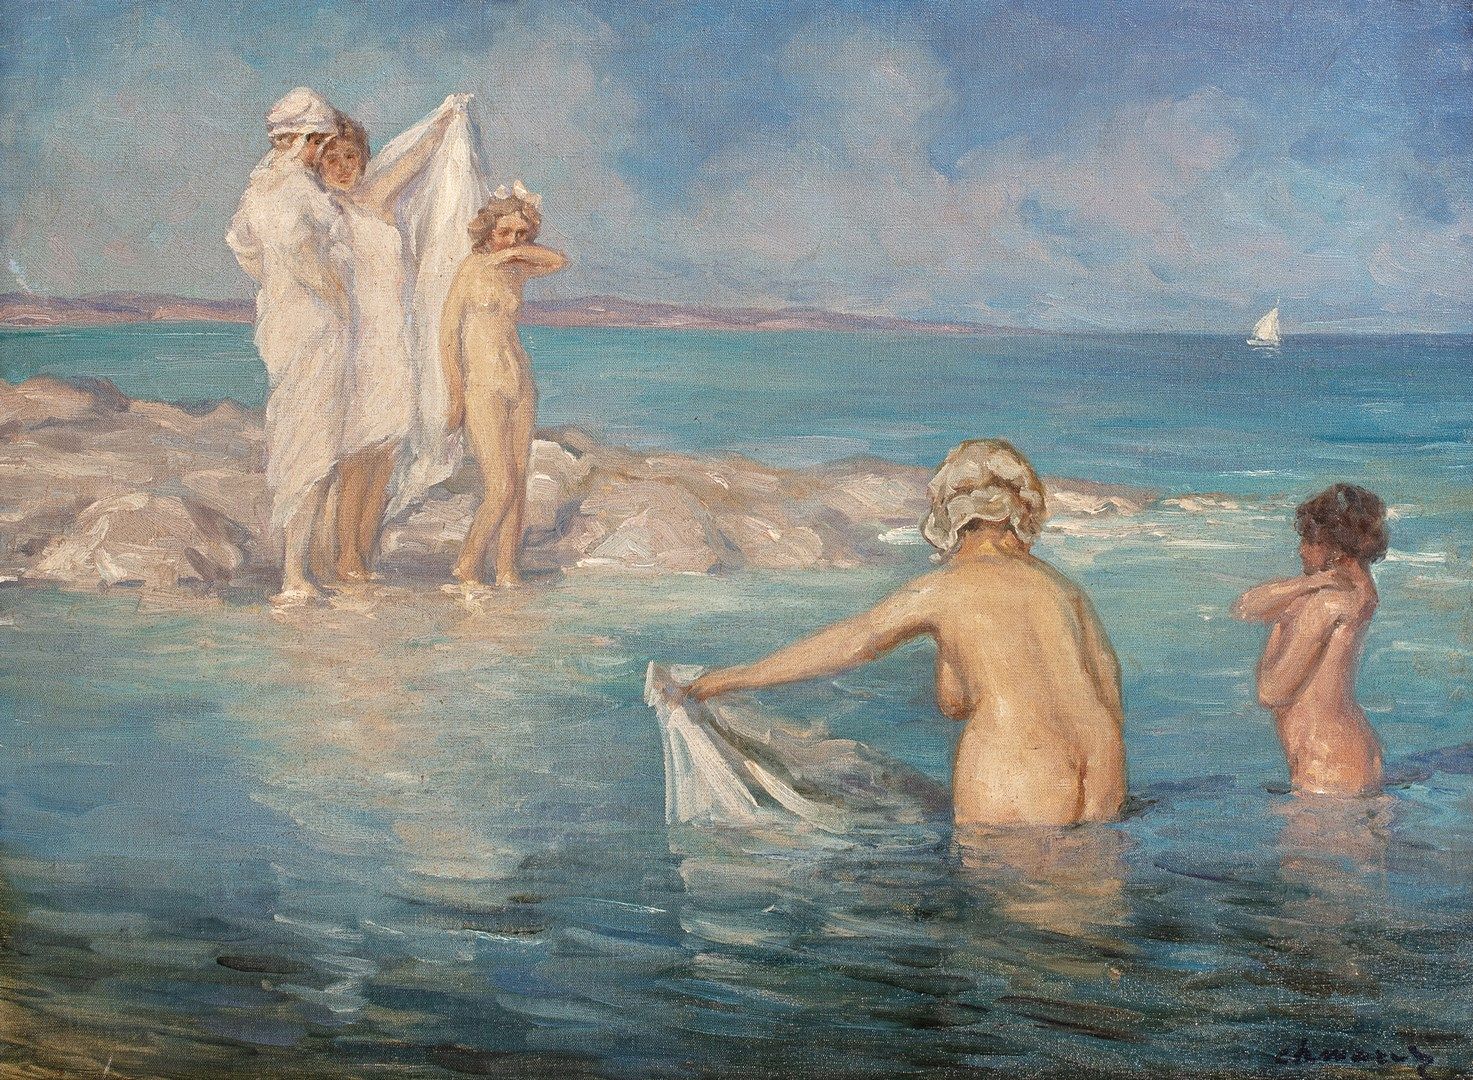 Null 哲马洛夫-保罗, 1874-1950

沐浴

布面油画，右下角有签名

60x81厘米